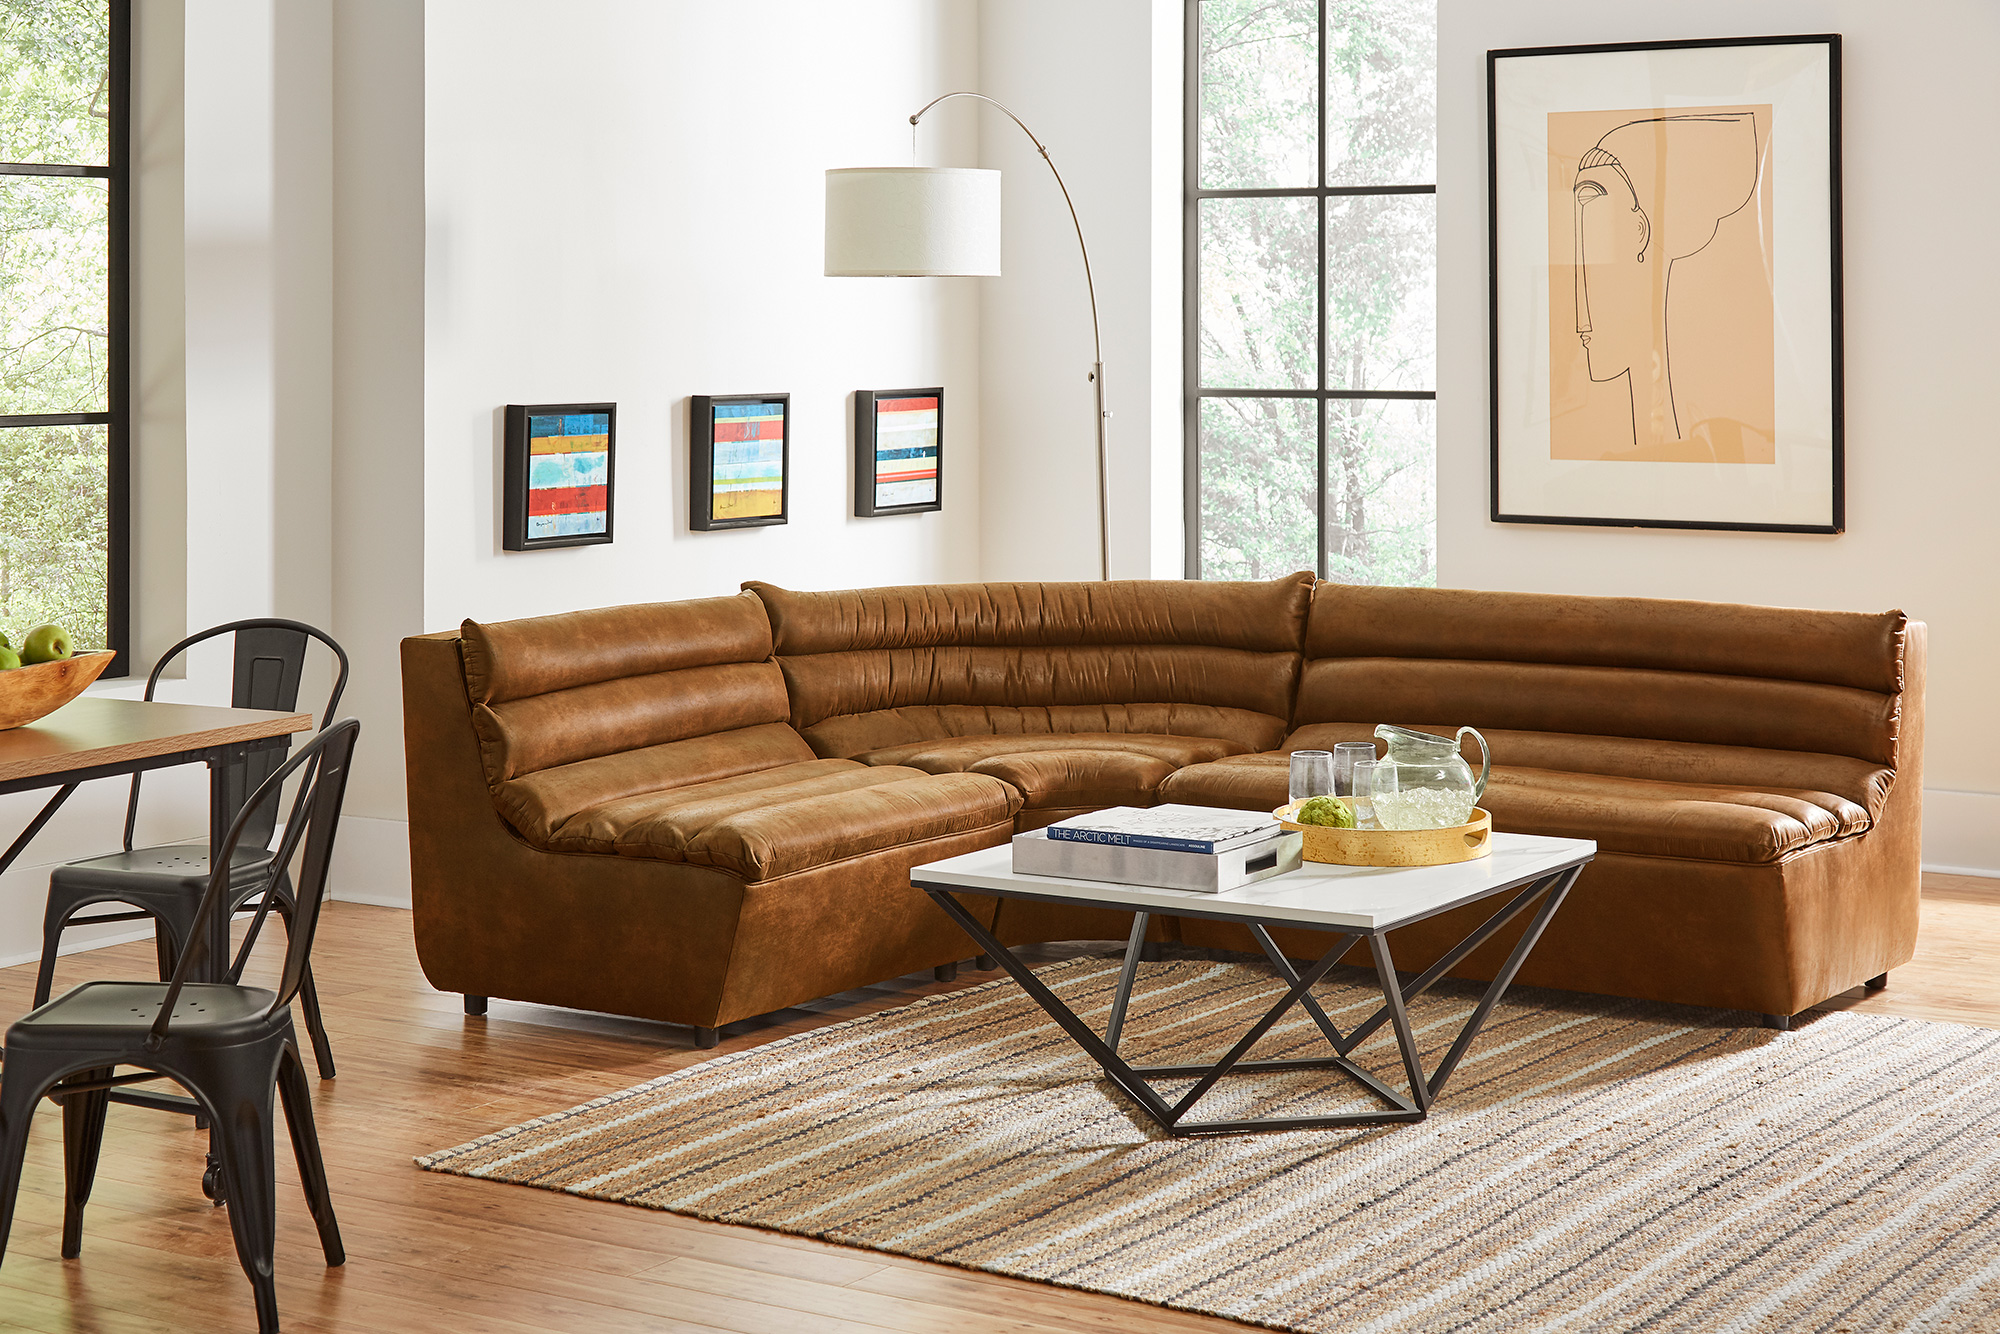 F3 NOLA living room student housing furniture